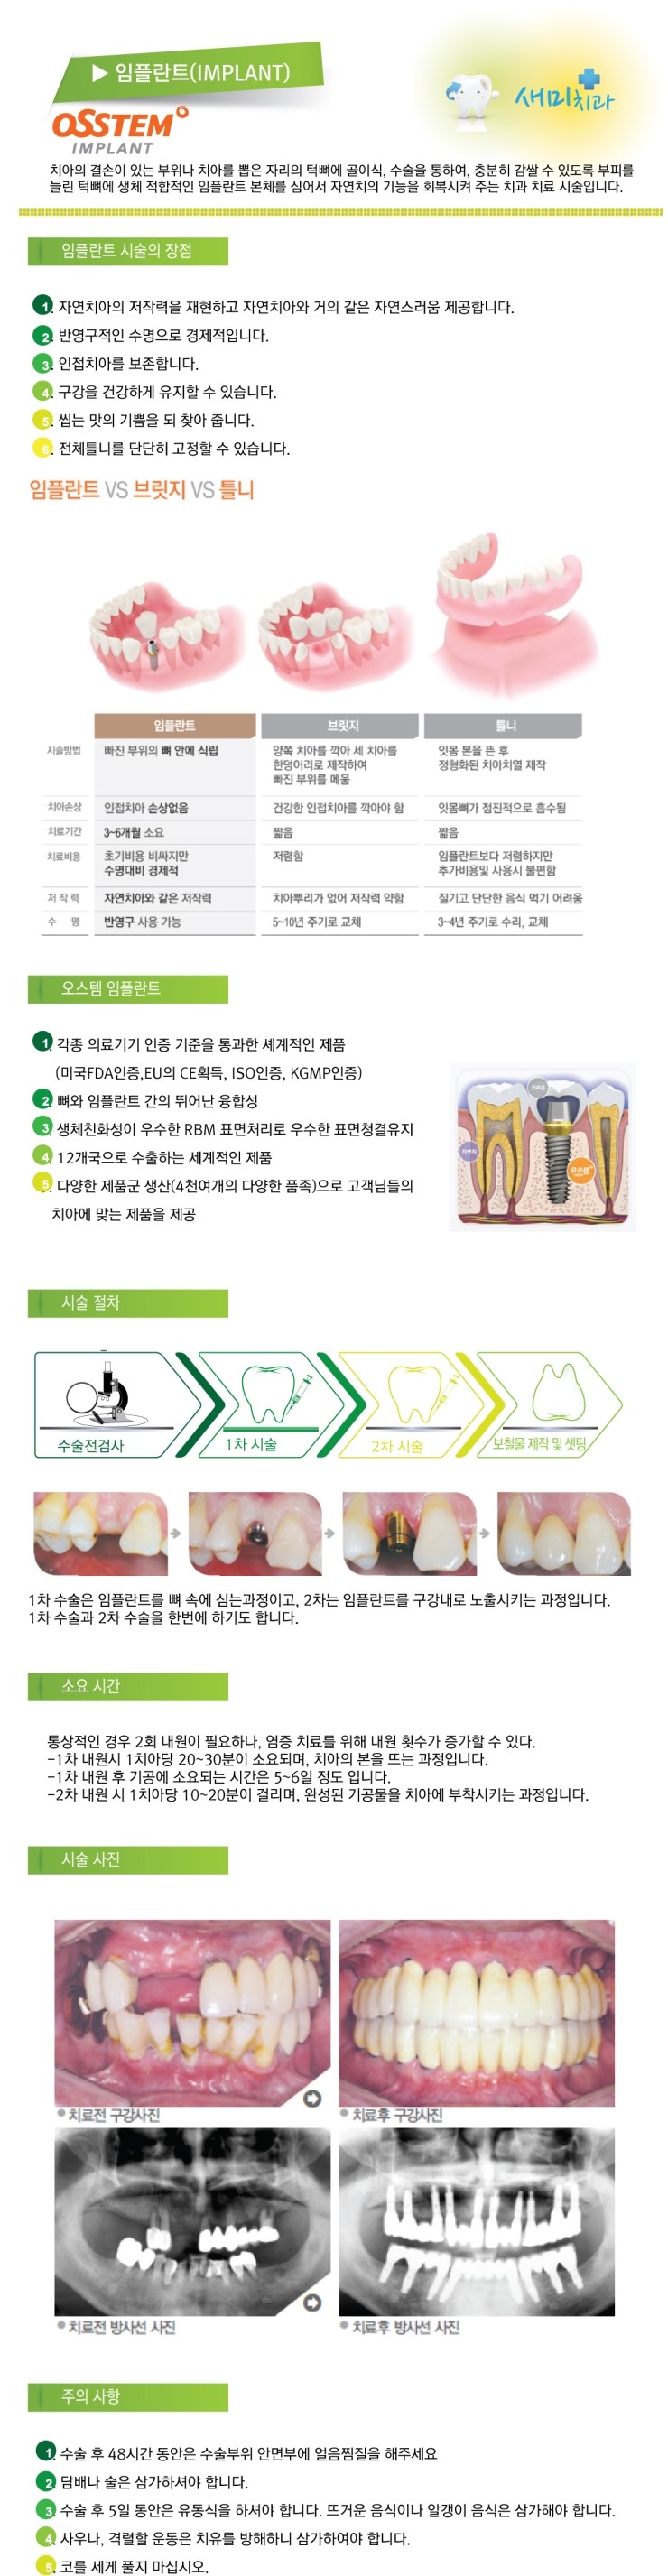 saemi-dental-implants